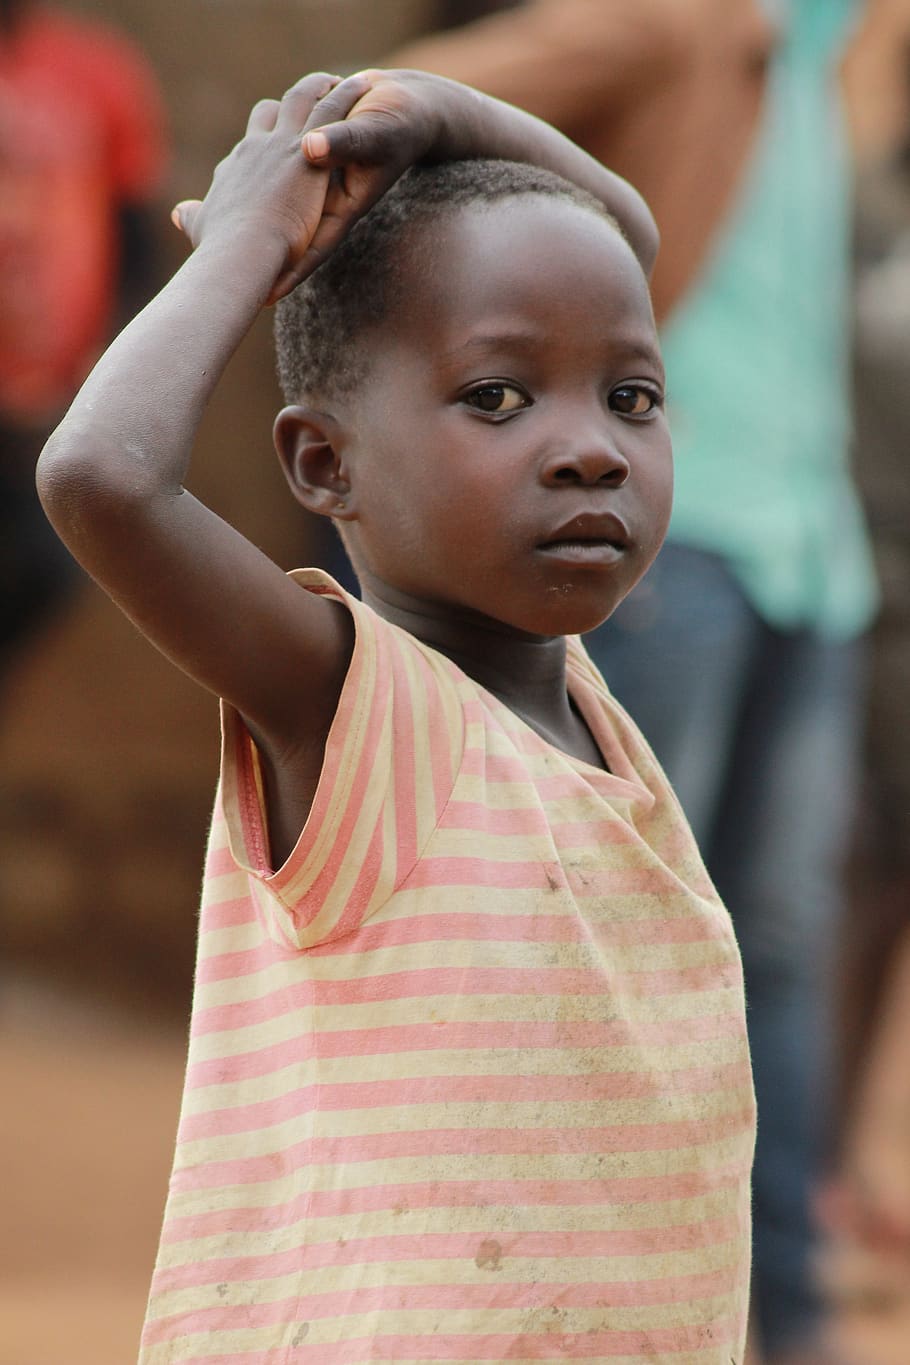 uganda, africa, poverty, young, black, life, child, poor, children, rural